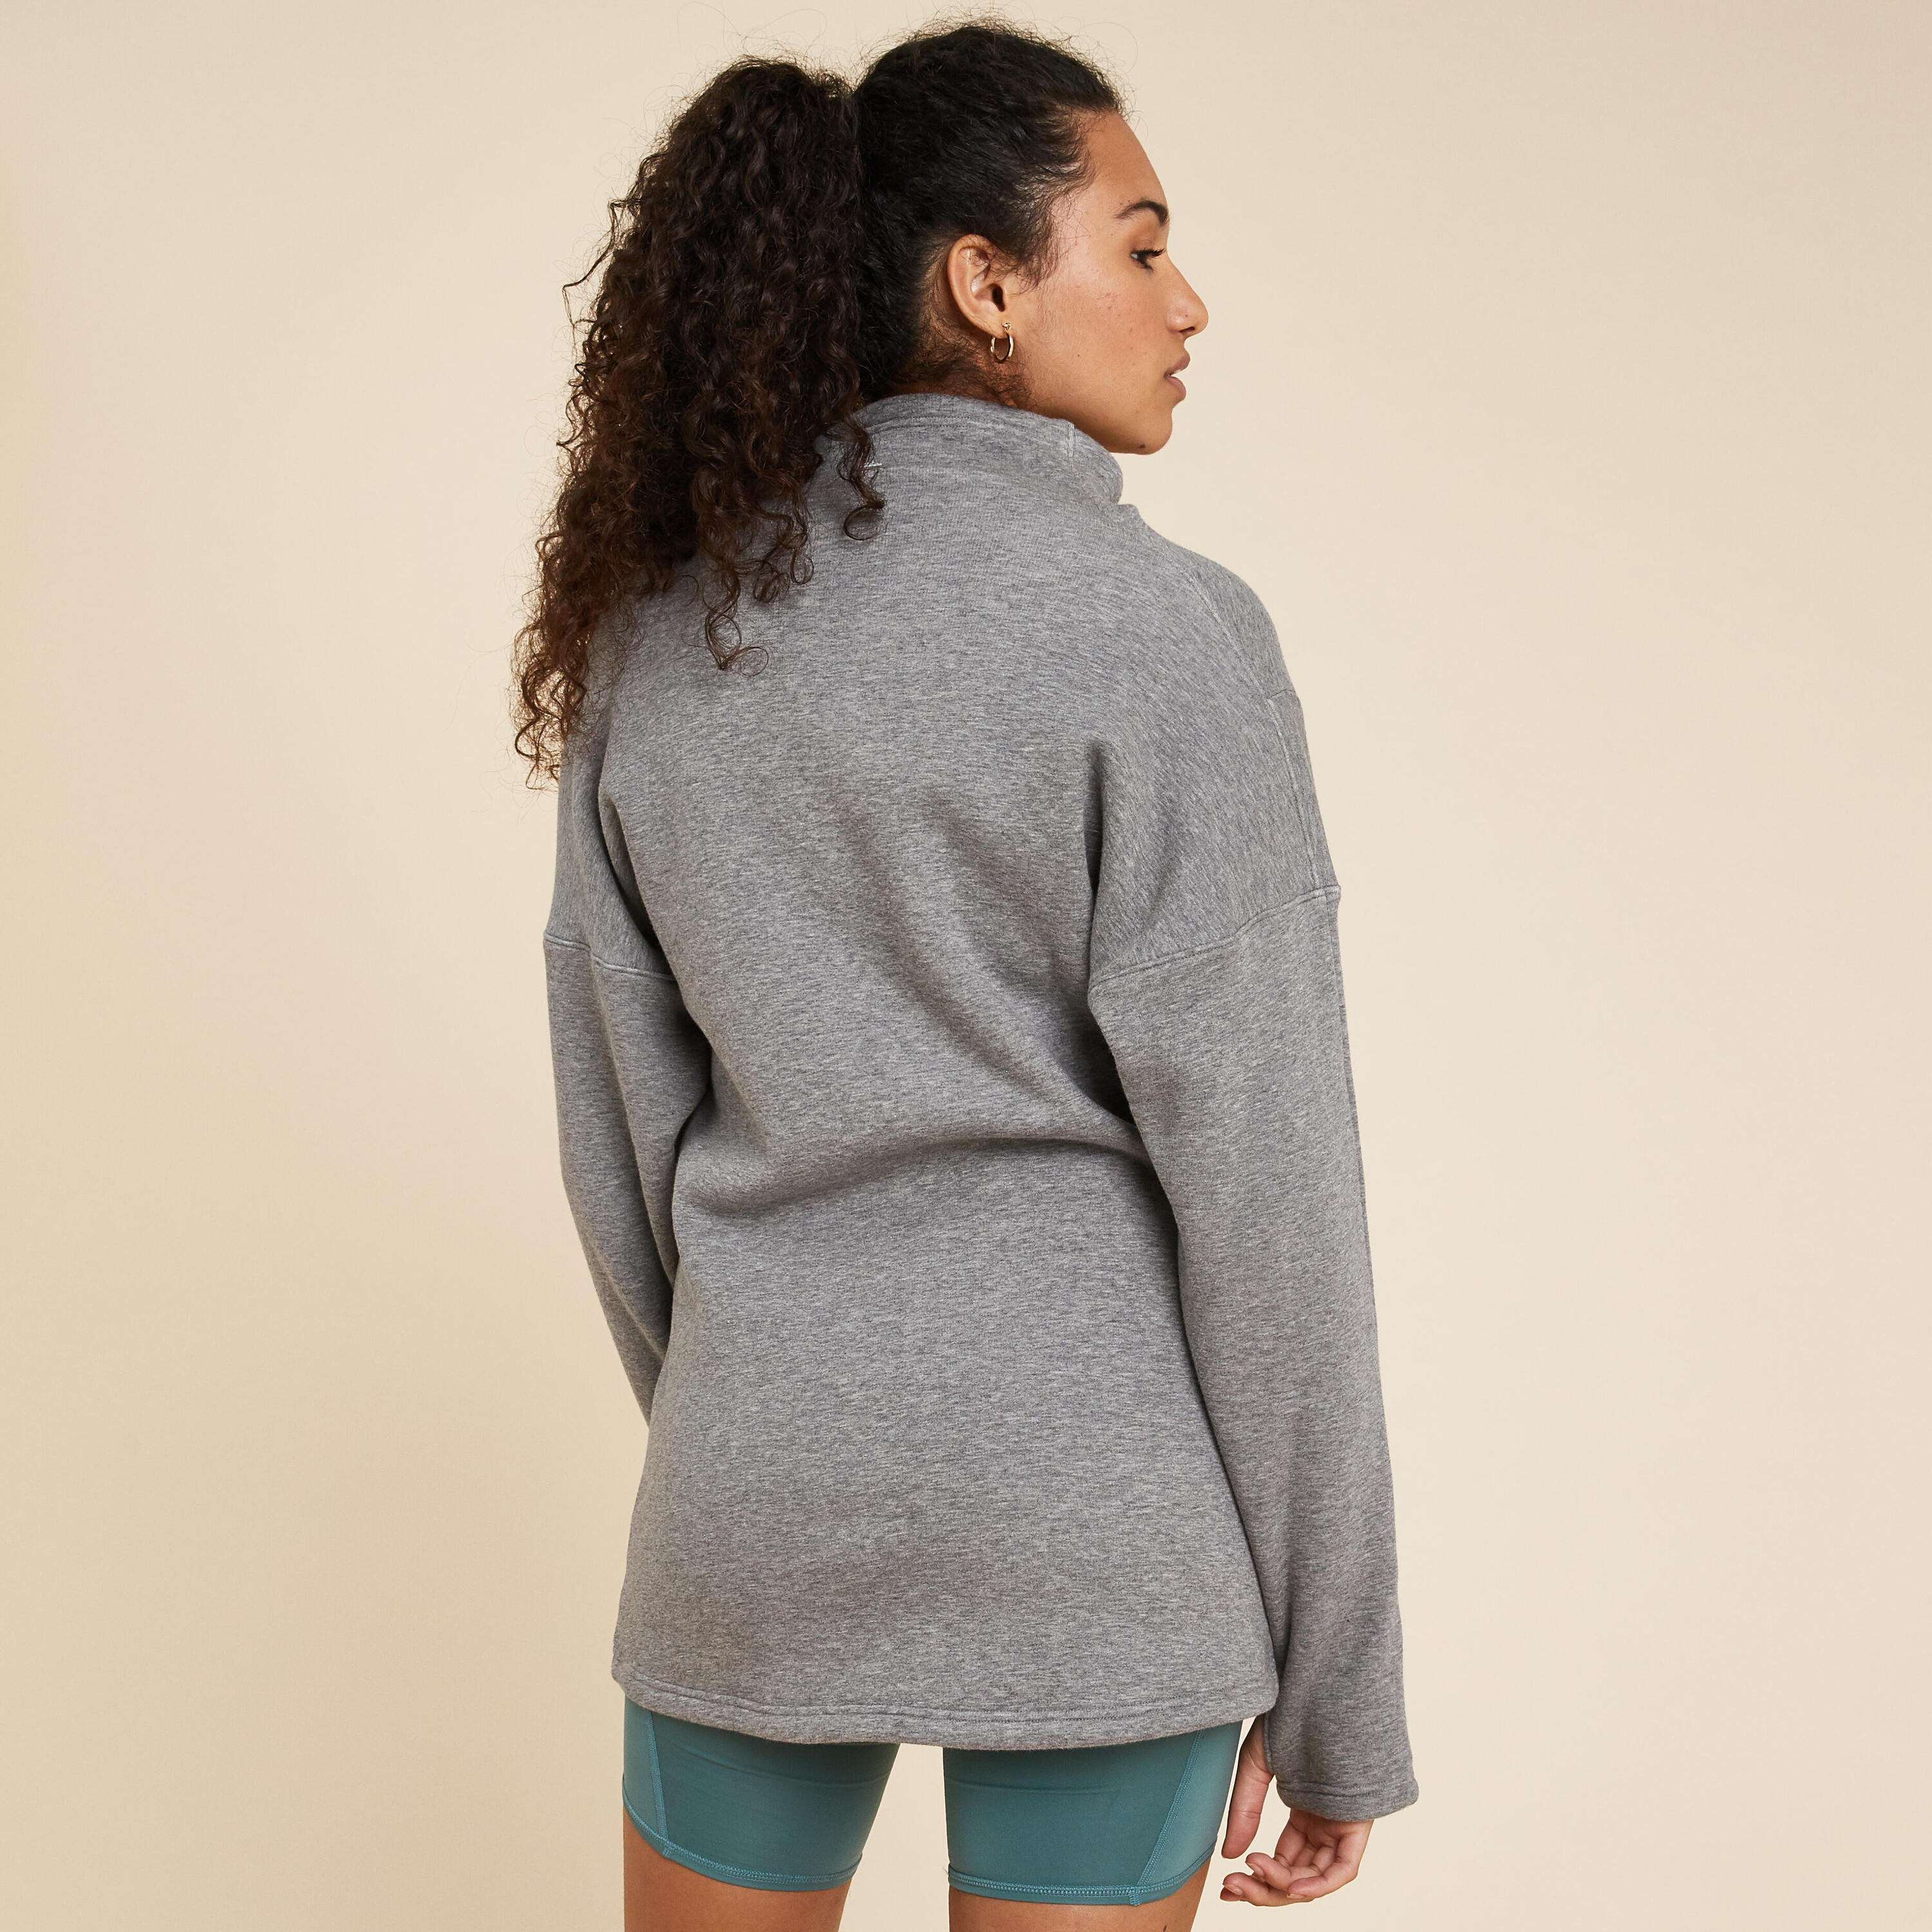 Unisex Yoga Warm Sweatshirt - Grey 5/11